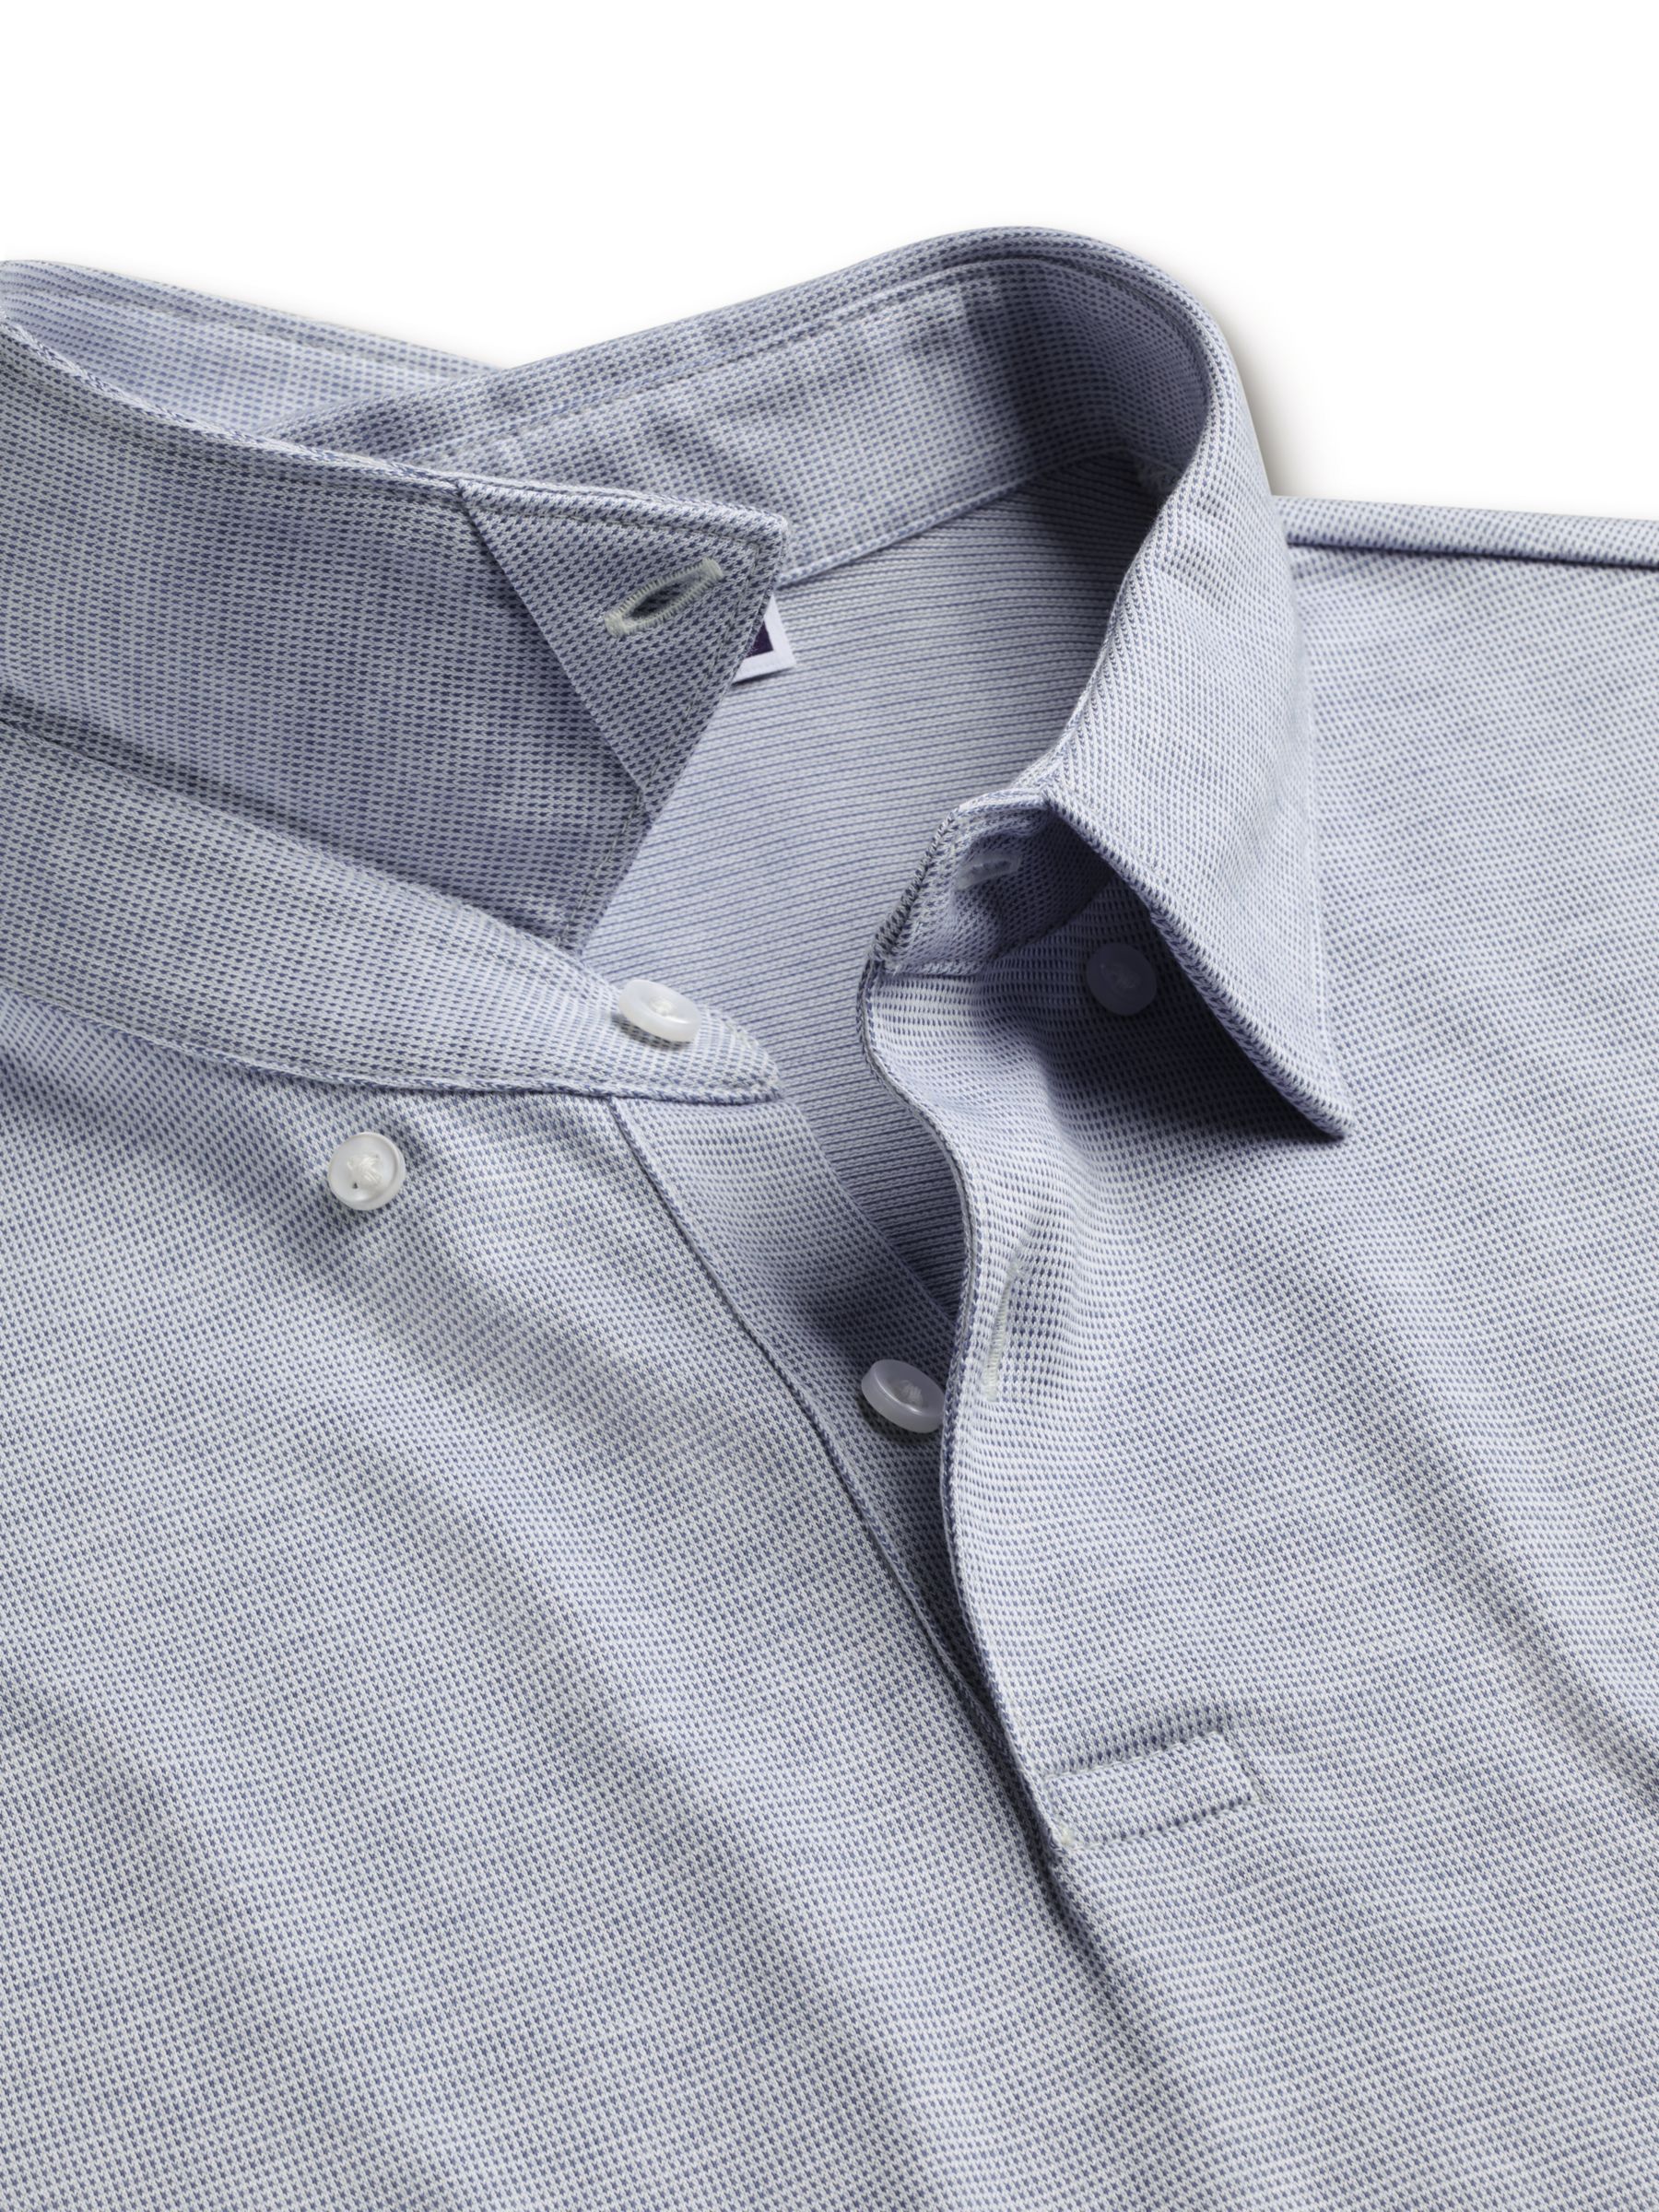 Charles Tyrwhitt Cool Polo Shirt, Light Blue, XS